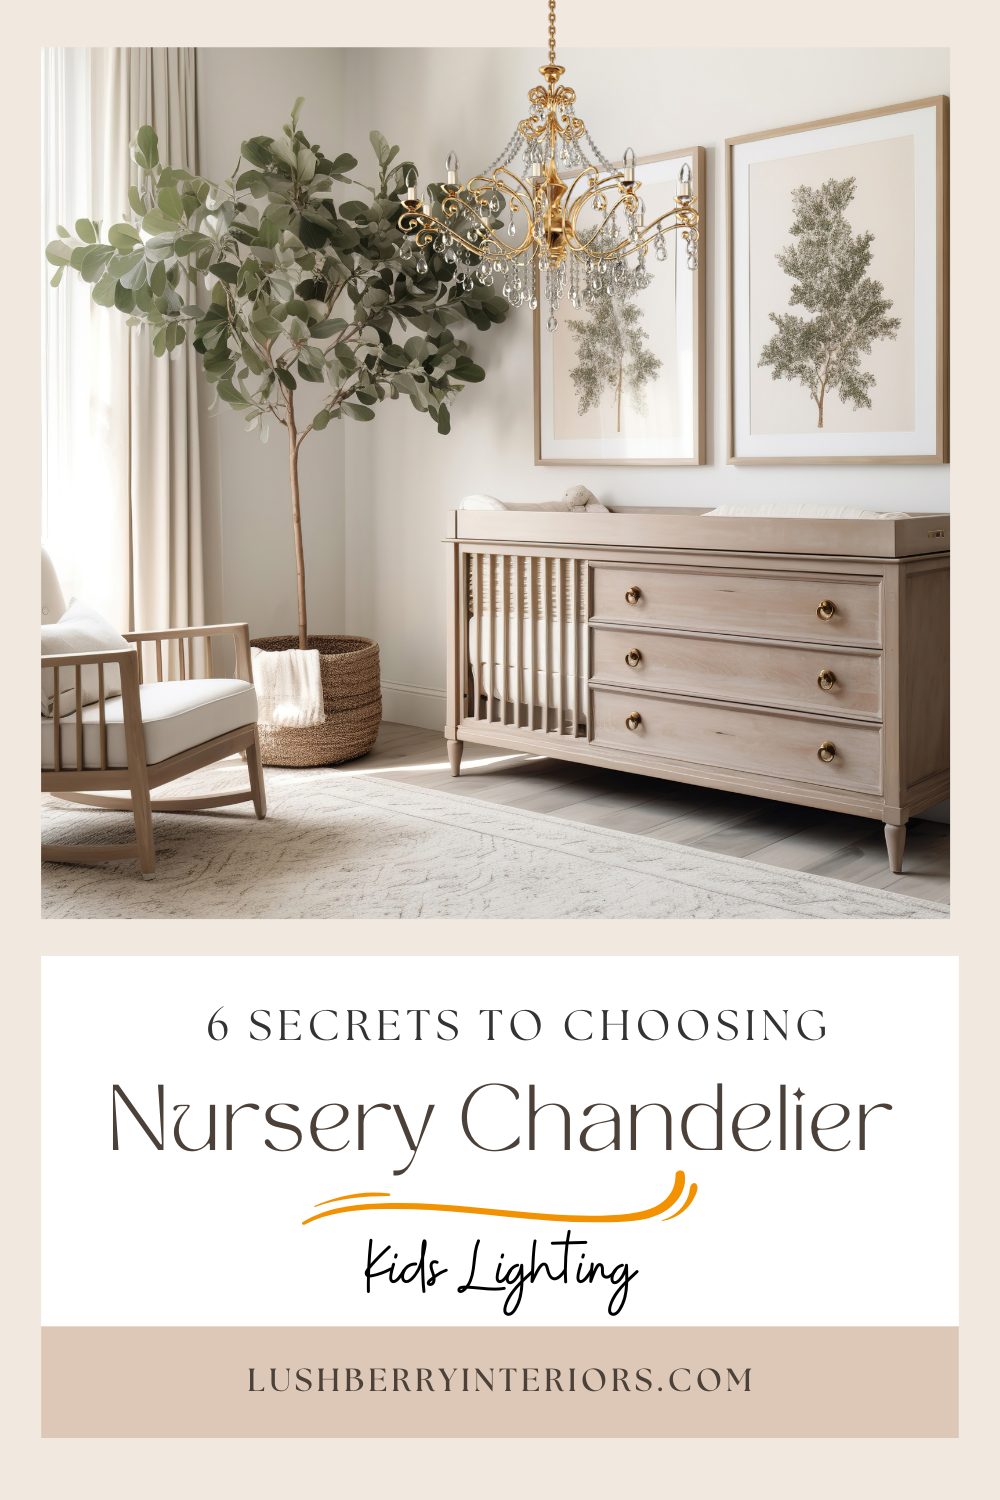 Nursery chandelier to illuminate your baby's room